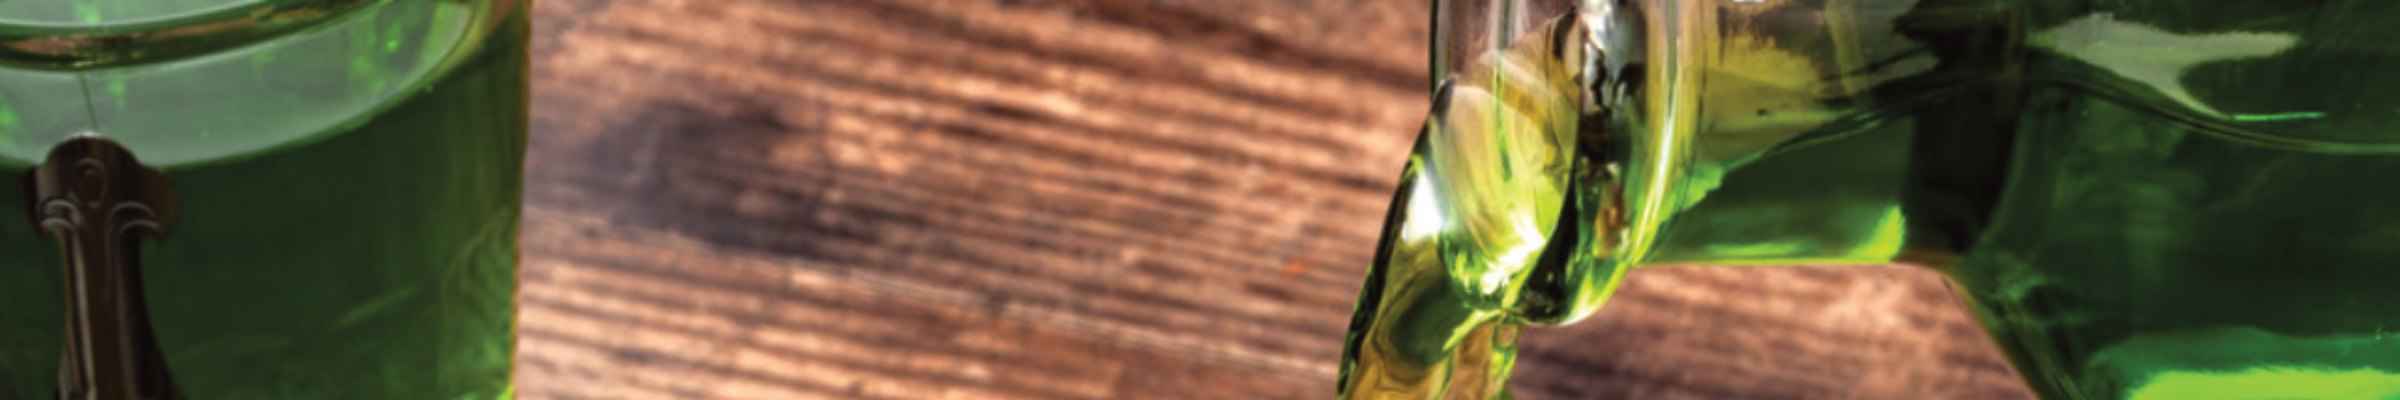 Absinthe Artisanale | Conroy Vins et Spiritueux